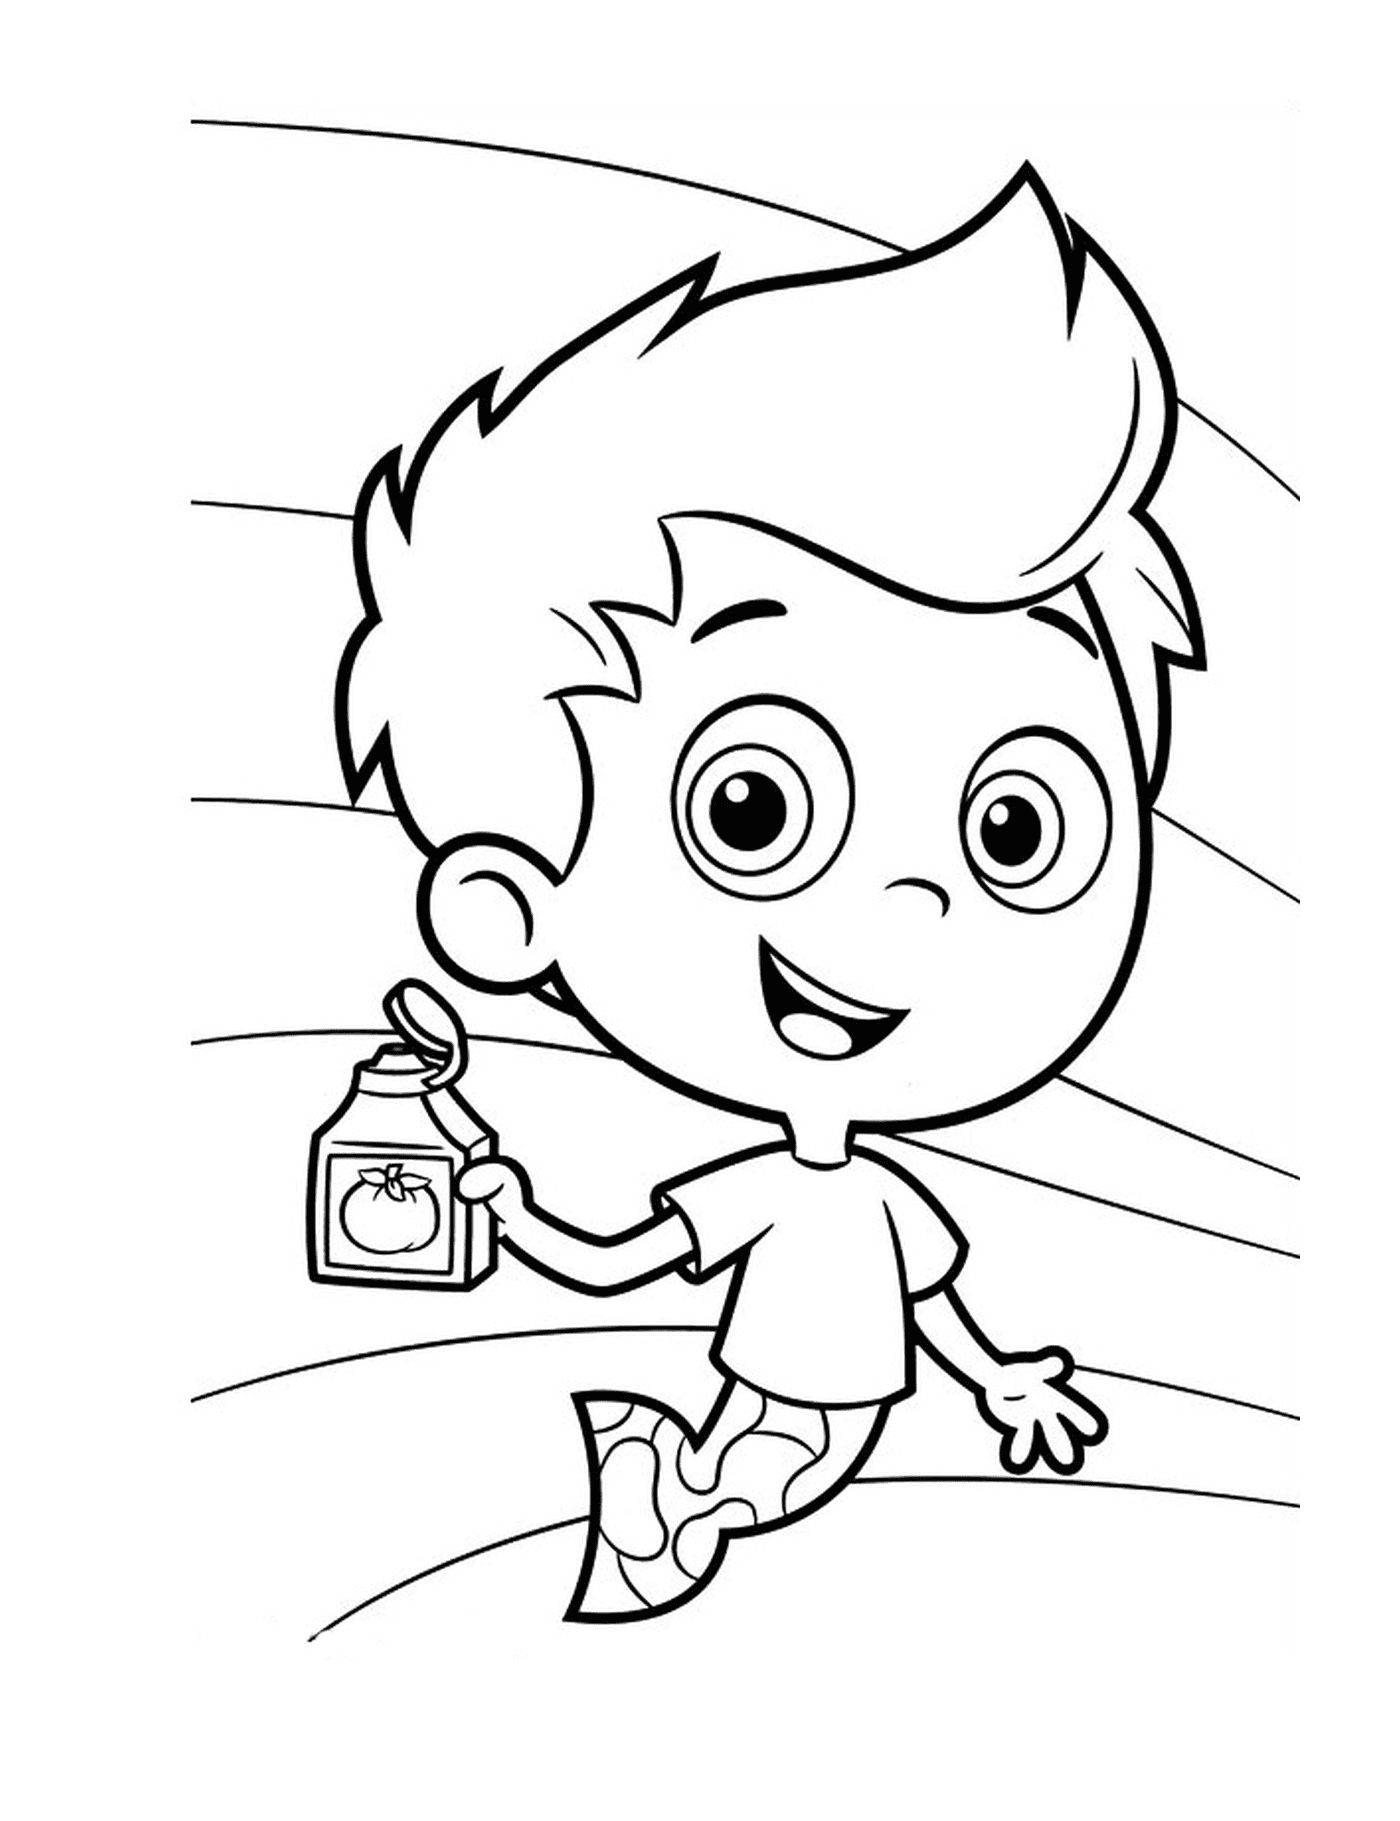  Un chico sosteniendo una botella de jugo de tomate 